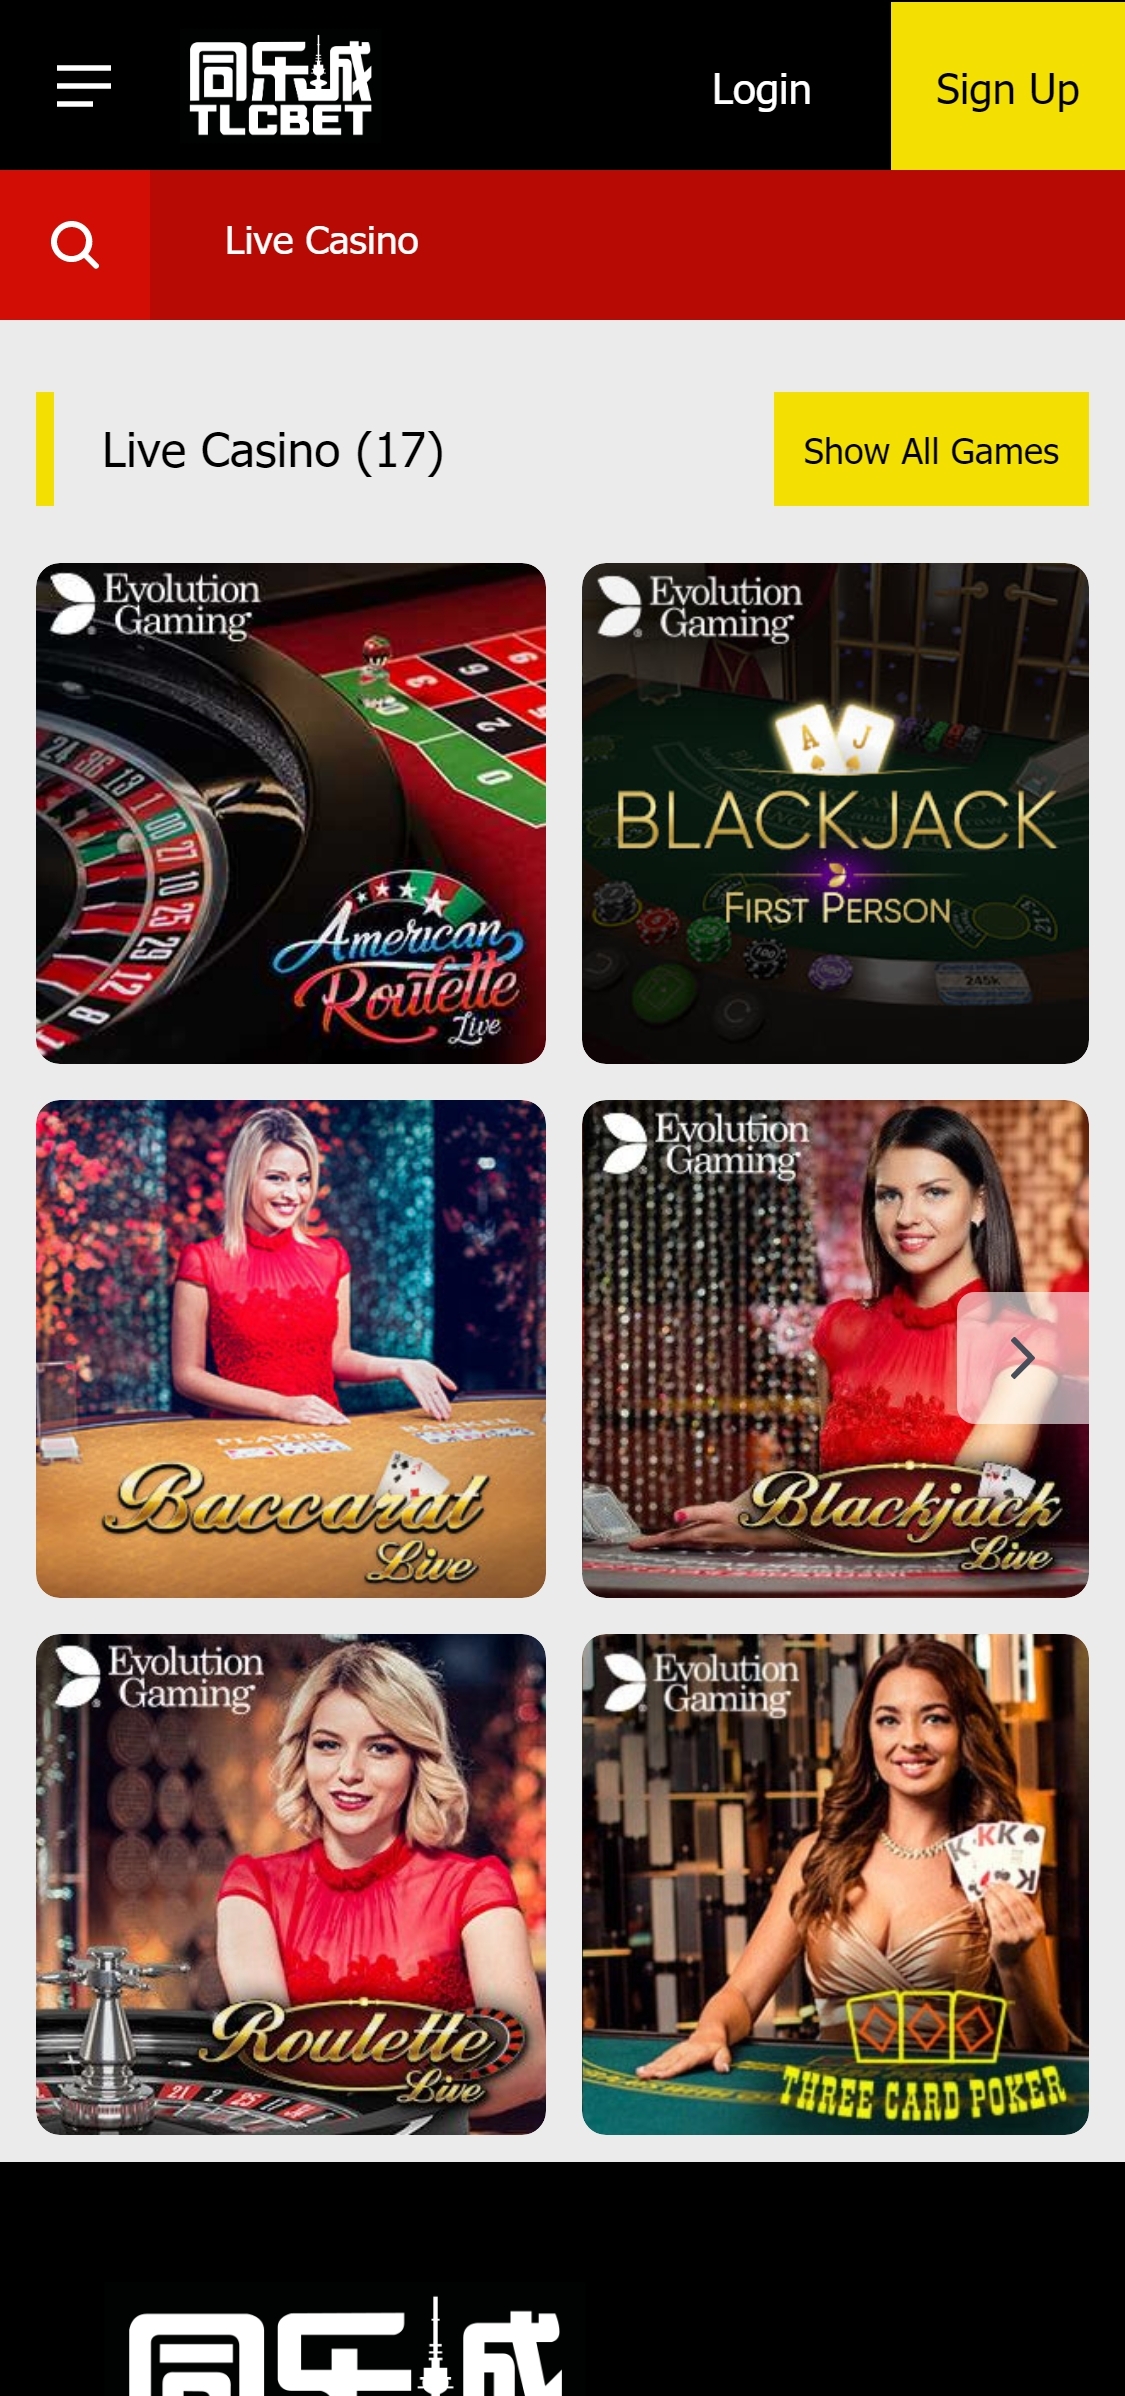 TLC Bet Casino Mobile Live Dealer Games Review